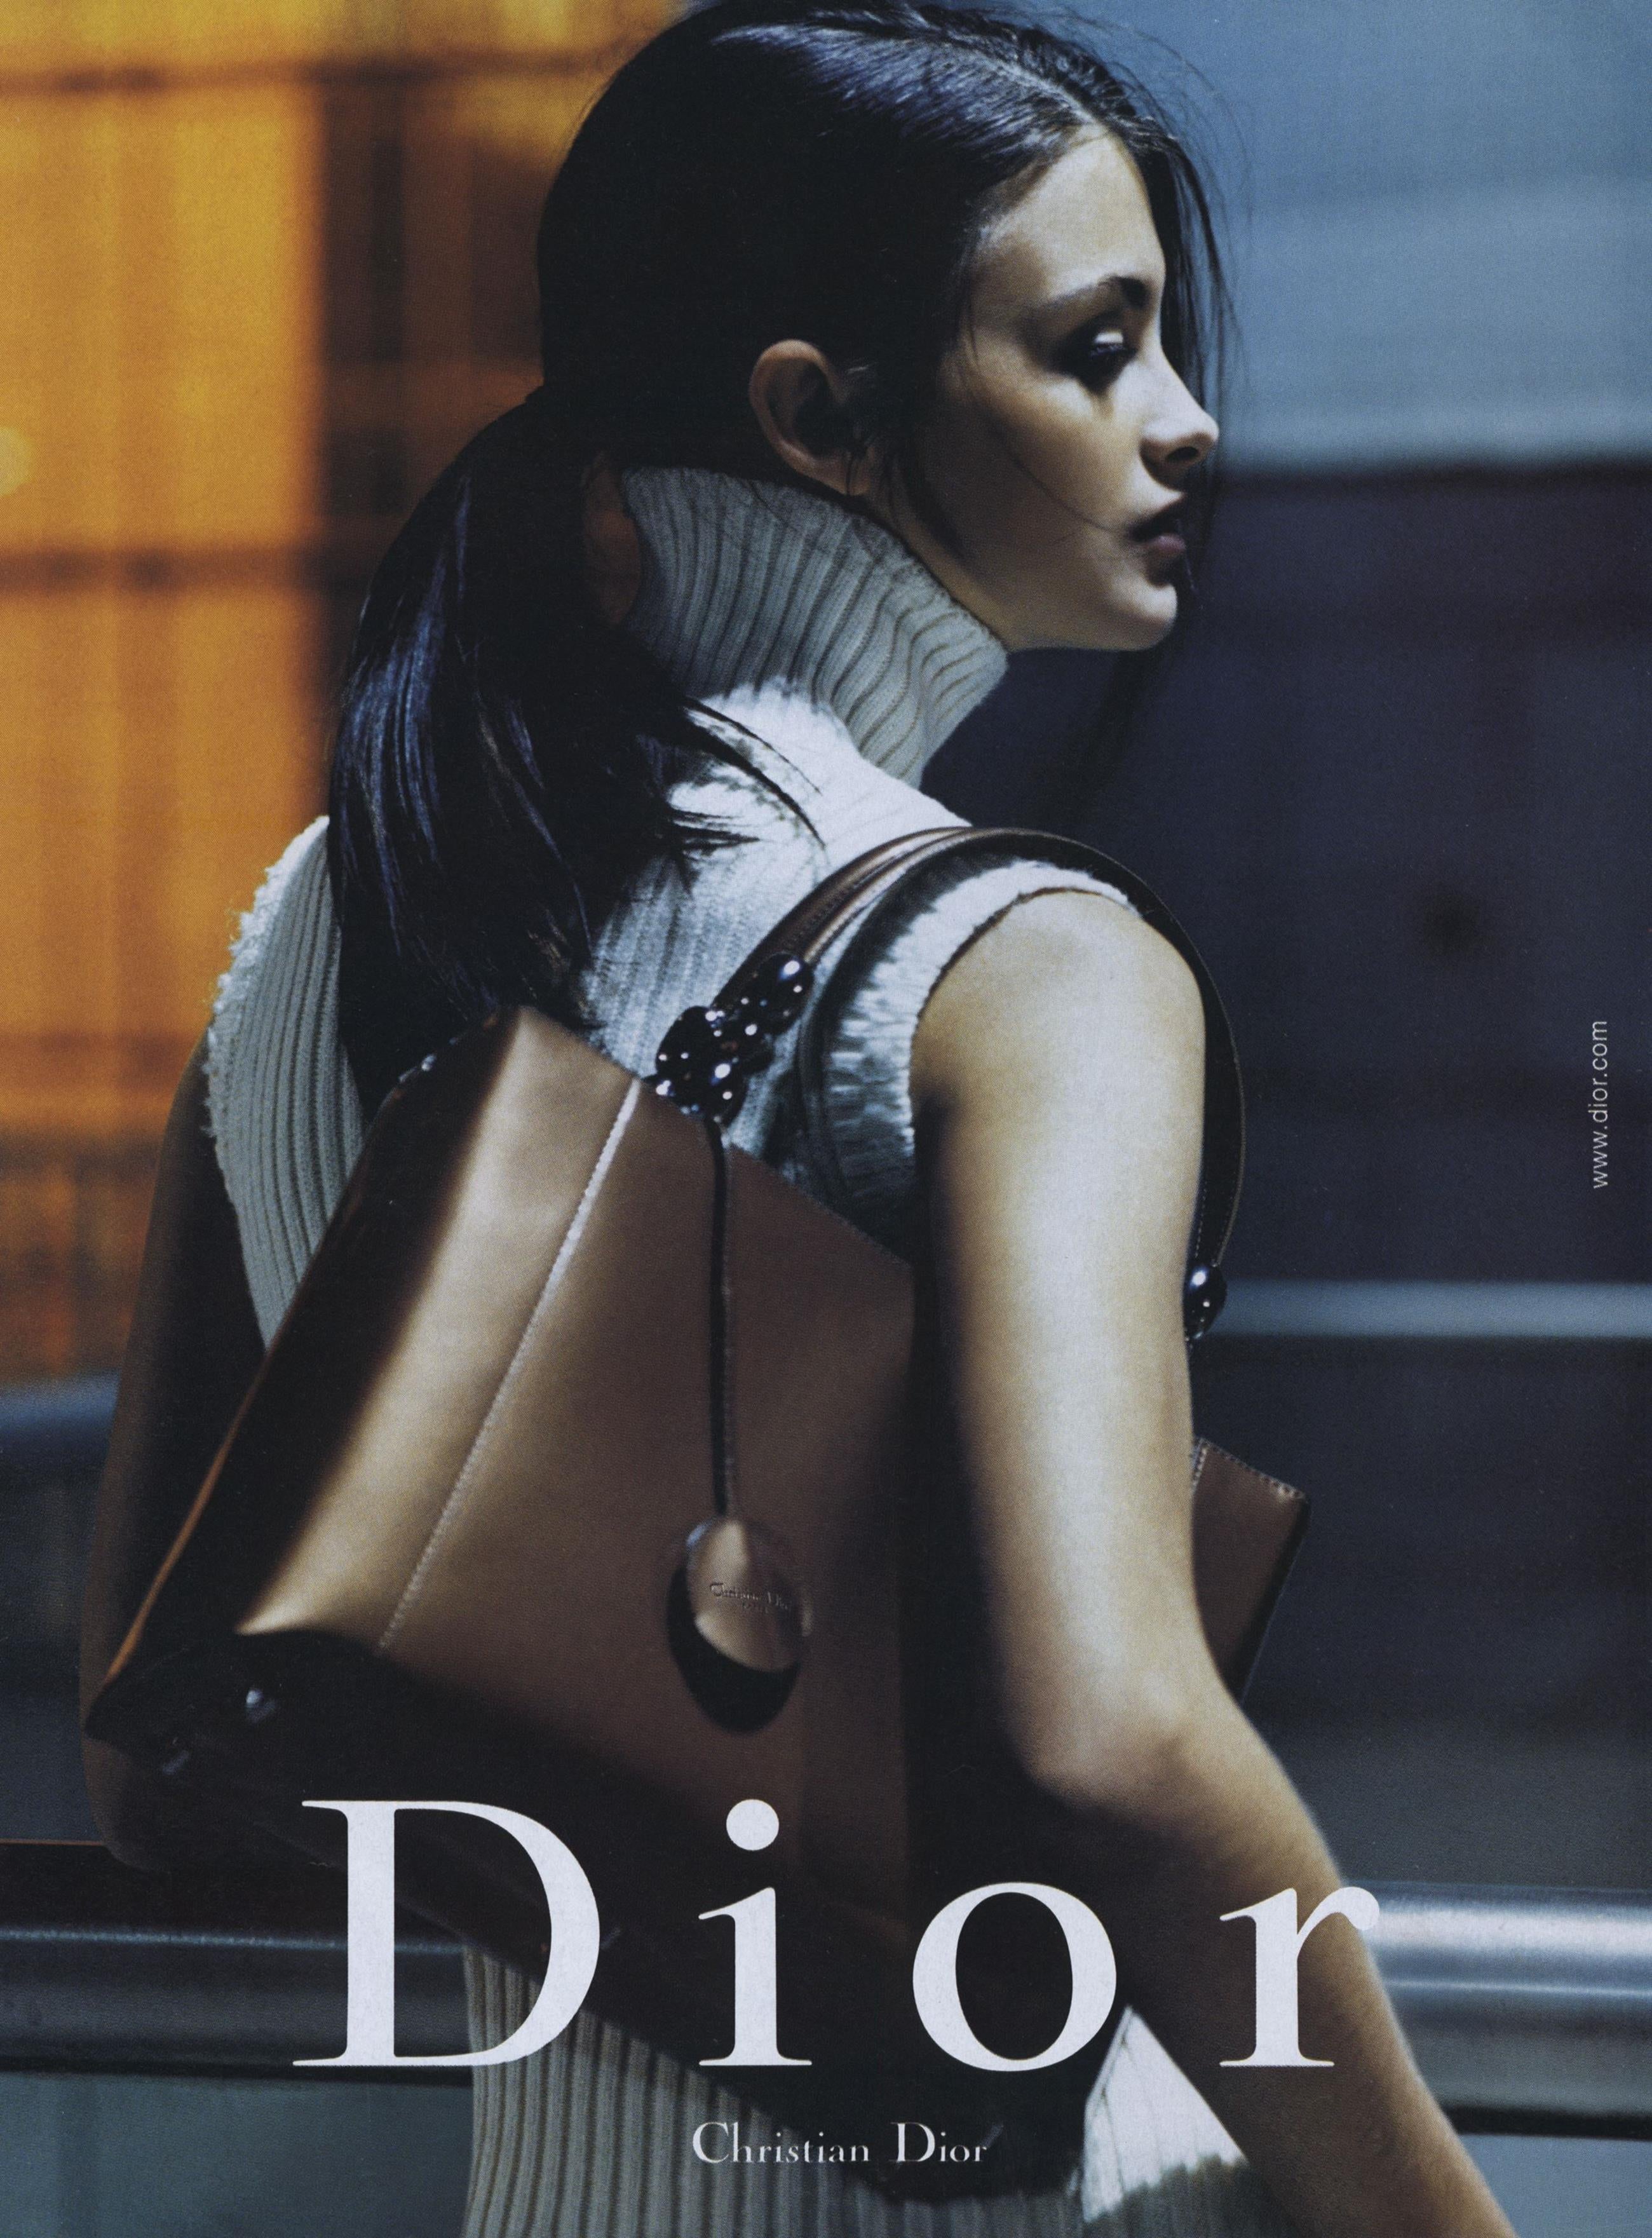 Gilet Christian Dior & John Galliano F/W 1999
John Galliano pour Christian Dior
Collectional : F/W 1999
CAMPAGNE PUBLICITAIRE : VOGUE PARIS OCT 1999 ; MANNEQUIN : TRISH GOFF ; PHOTOGRAPHE : PATRICK DEMARCHELIER.
Christian Dior style :